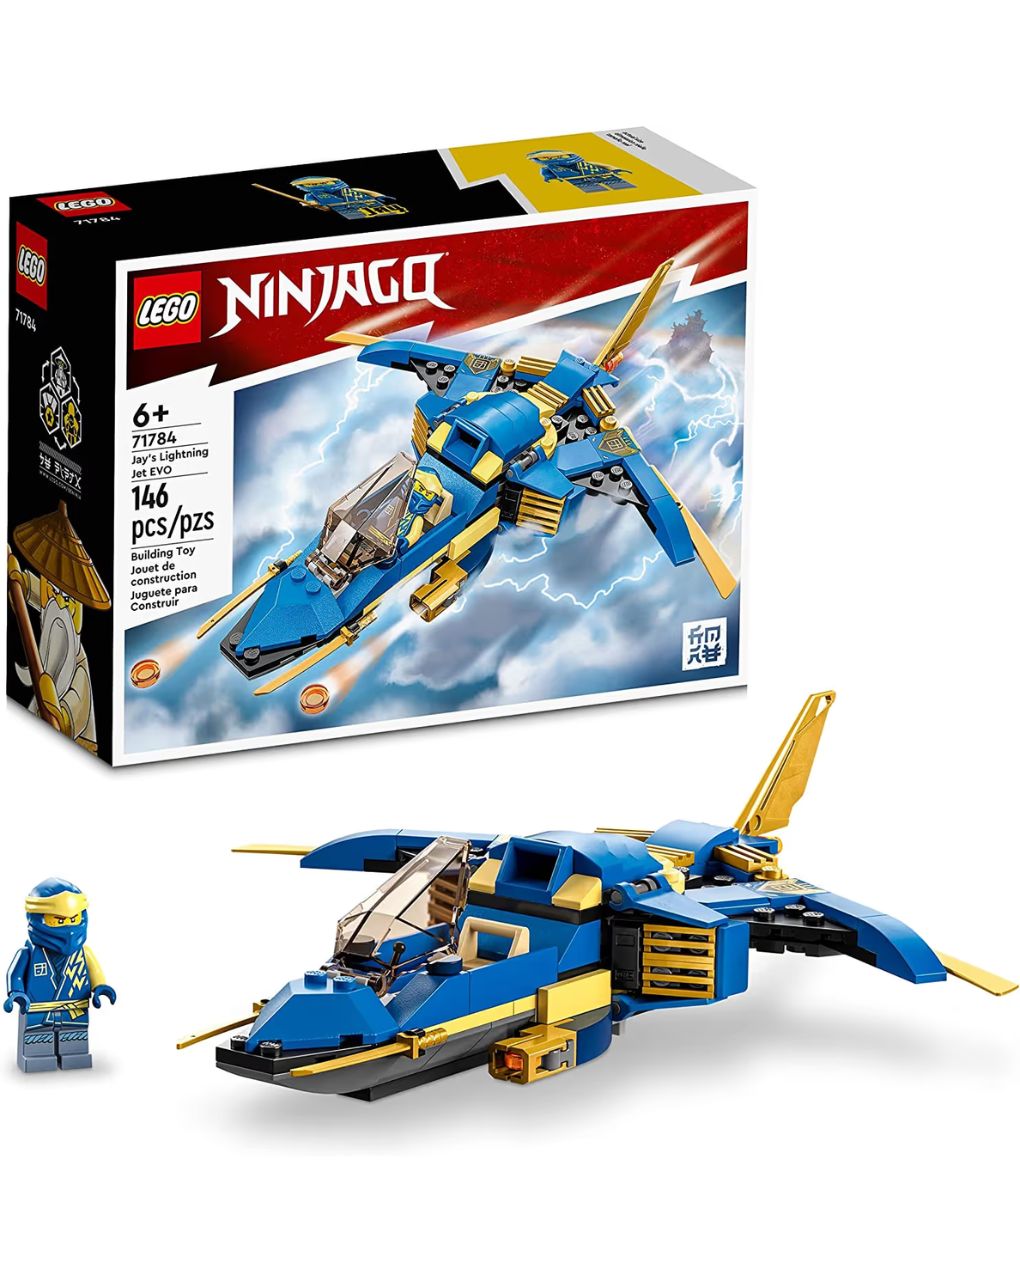 Lego ninjago jay’s lightning jet evo 71784